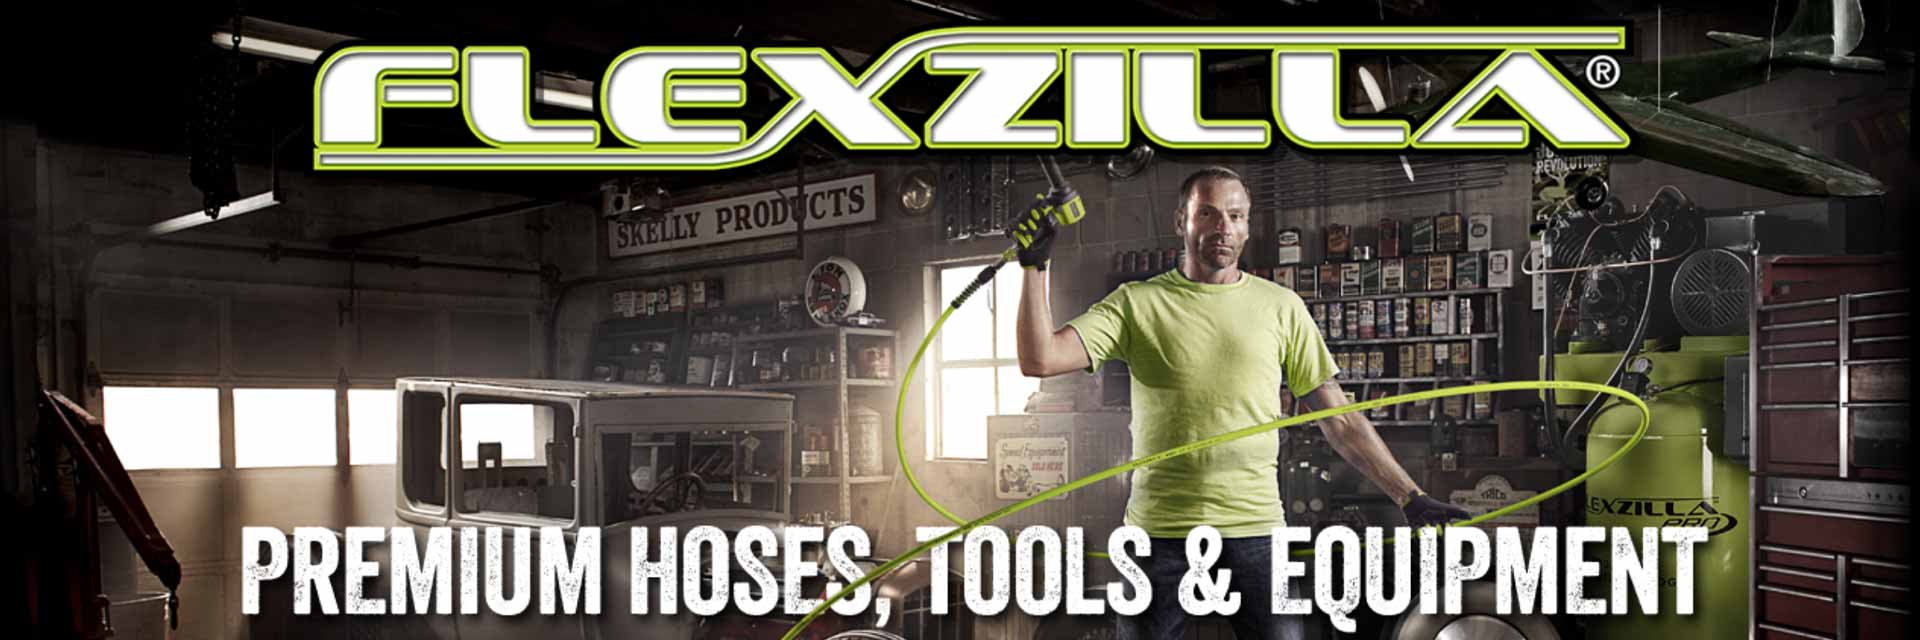 flexzilla-air-tools.jpg